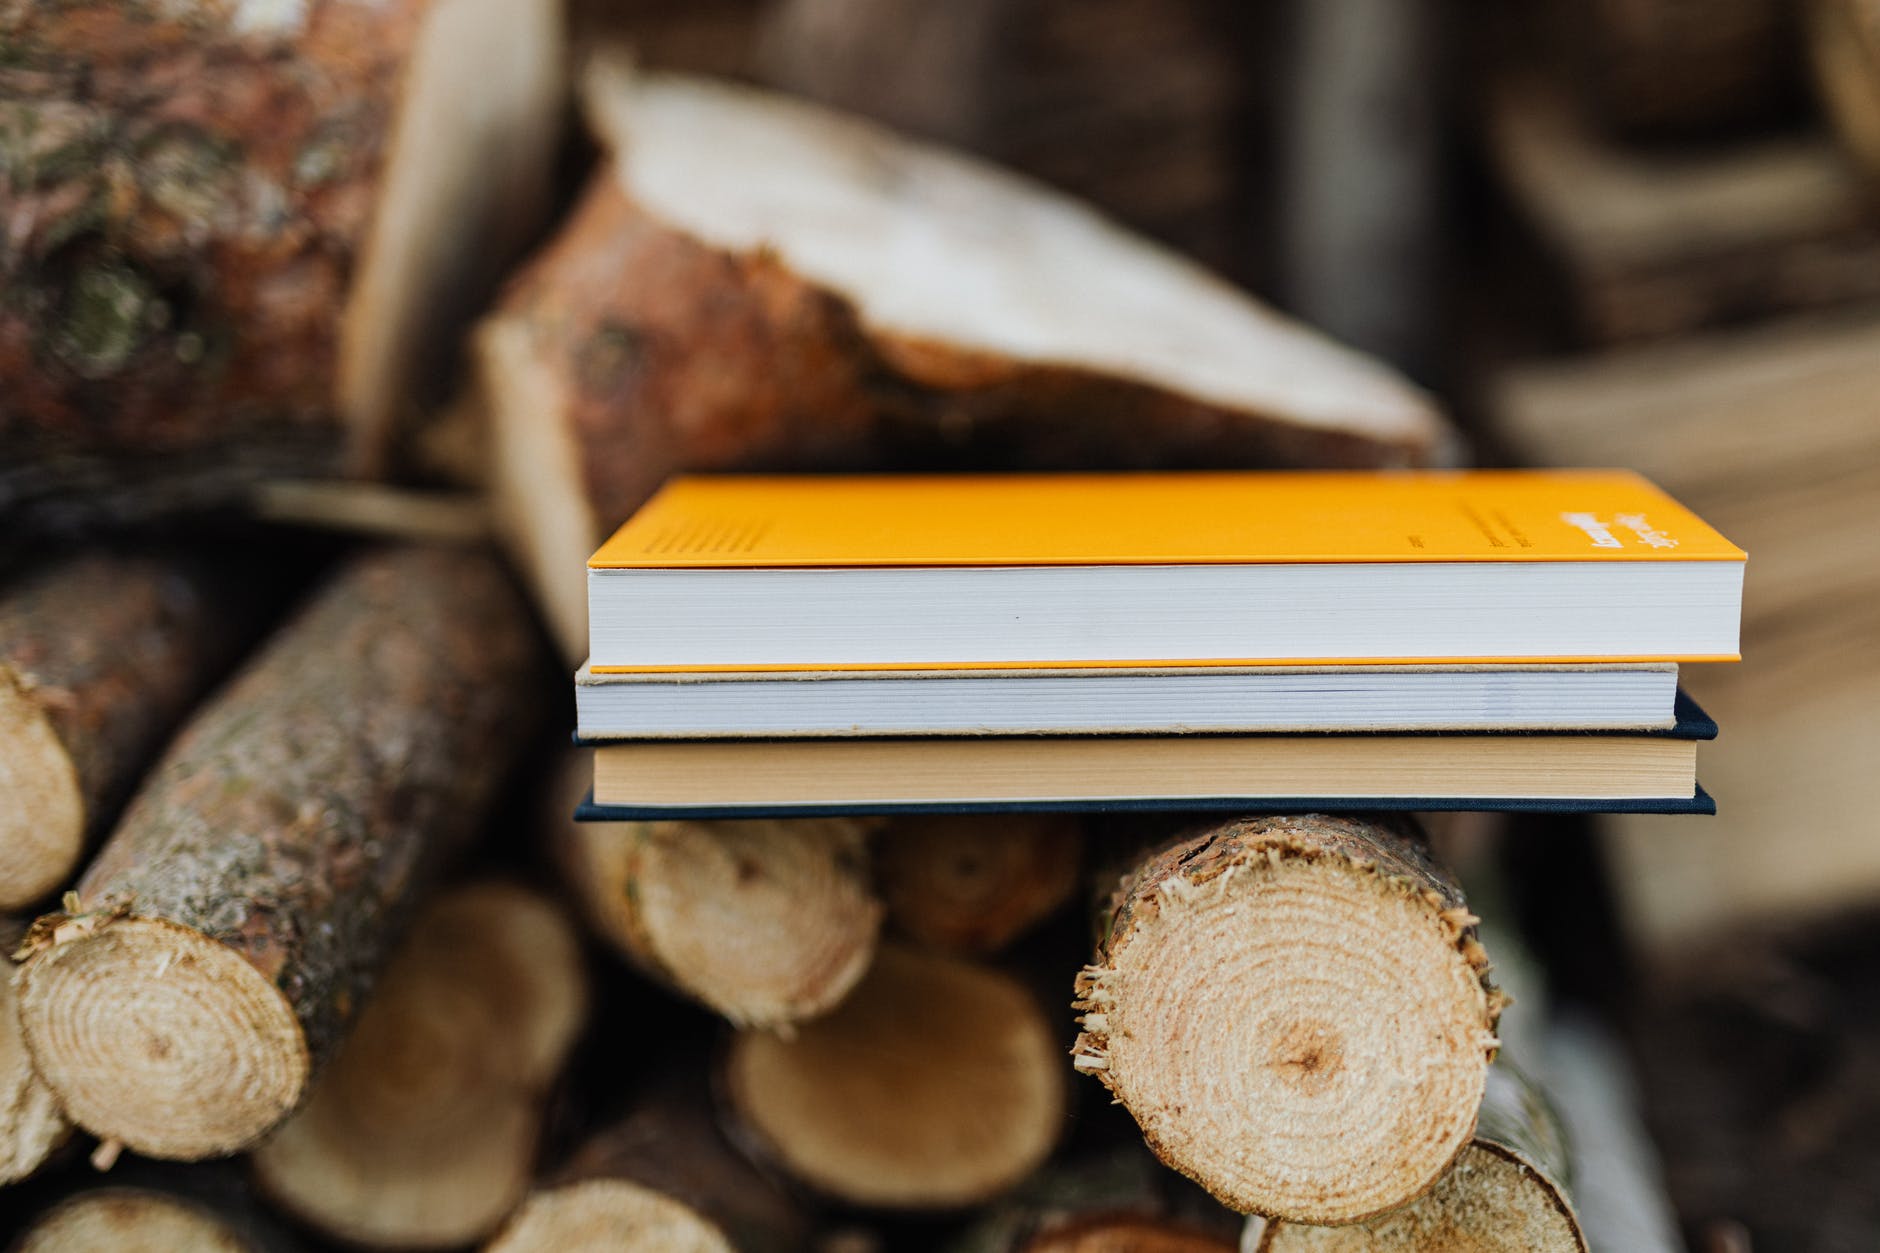 tri najinteligentnija znaka Zodijaka

books on wood stack in rural backyard